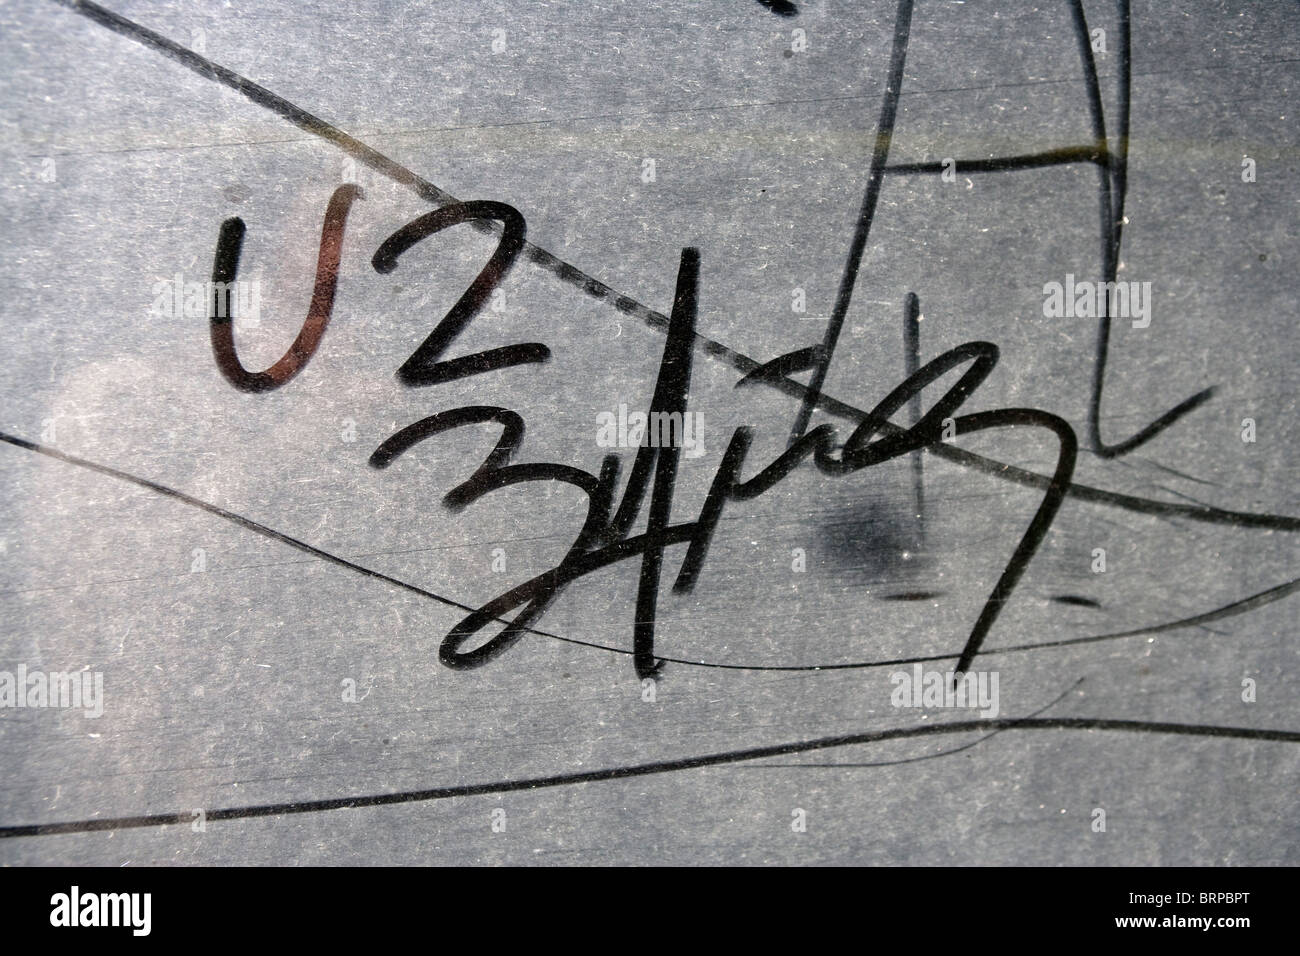 U2 live 360 tour, fan message written in dust on a truck stage transporter. Stock Photo